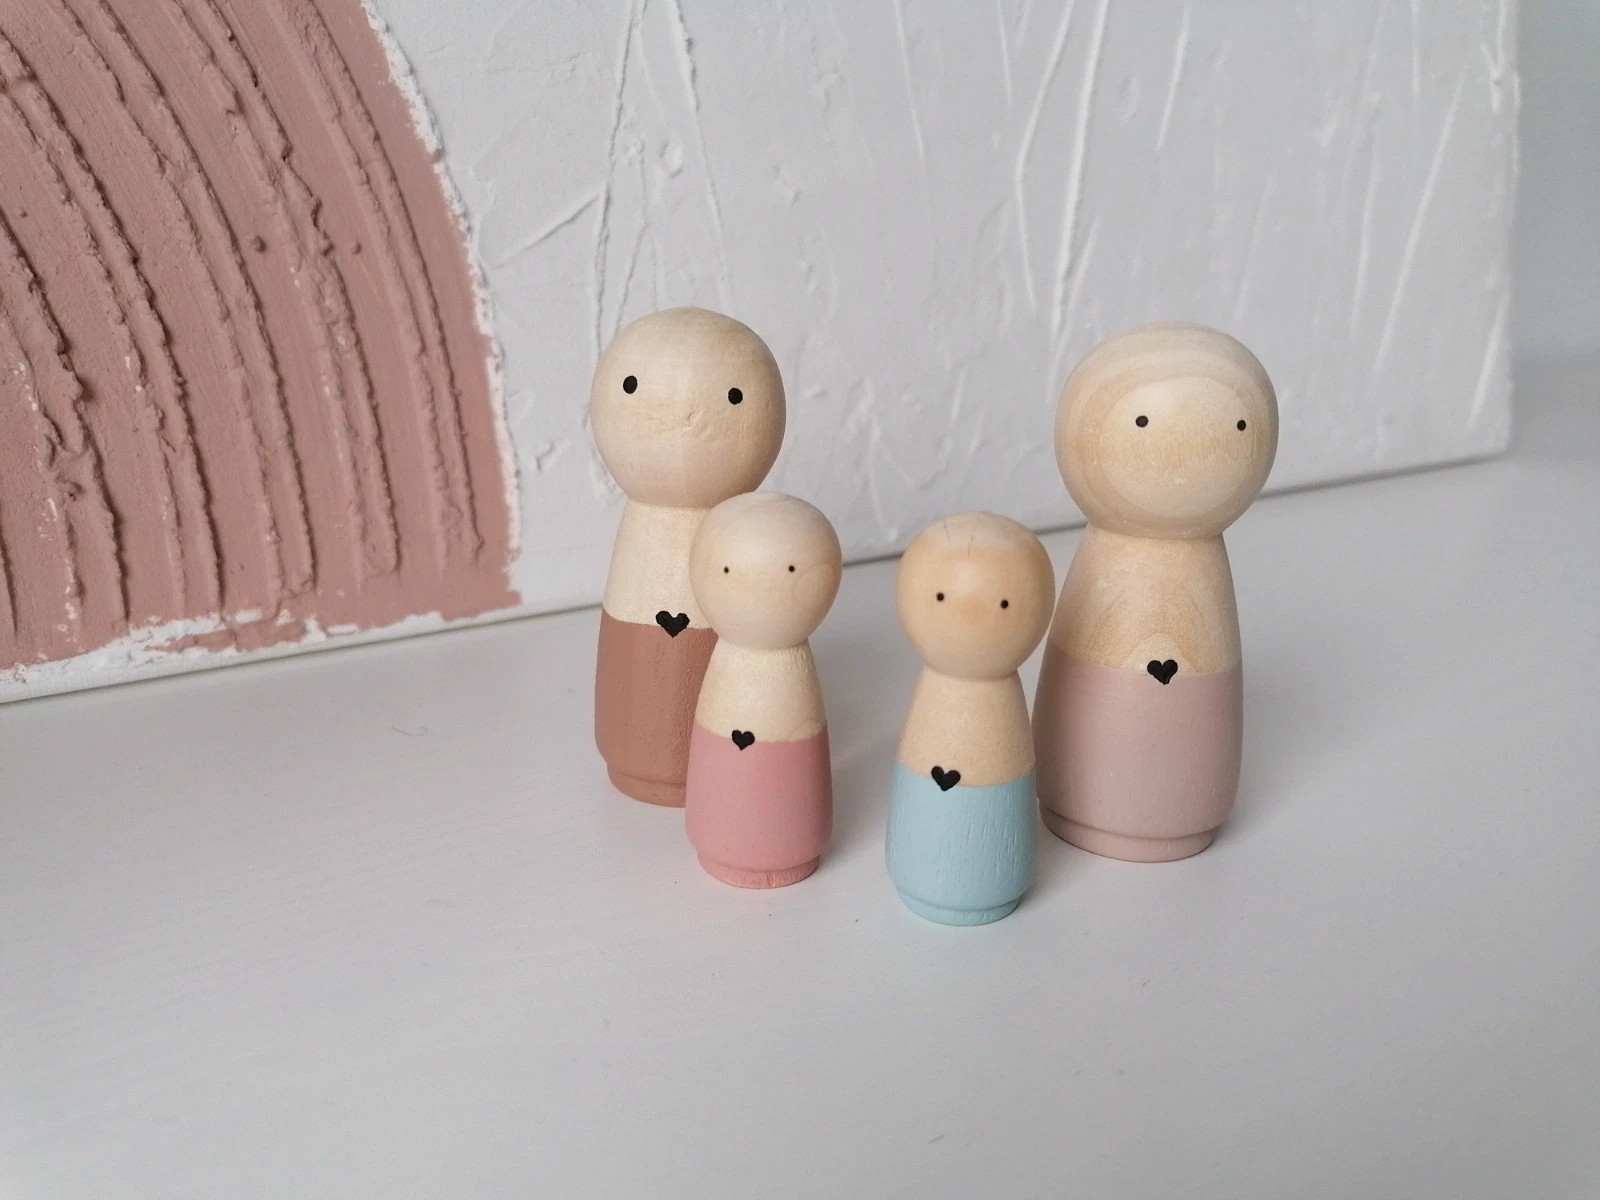 Handmade peg dolls